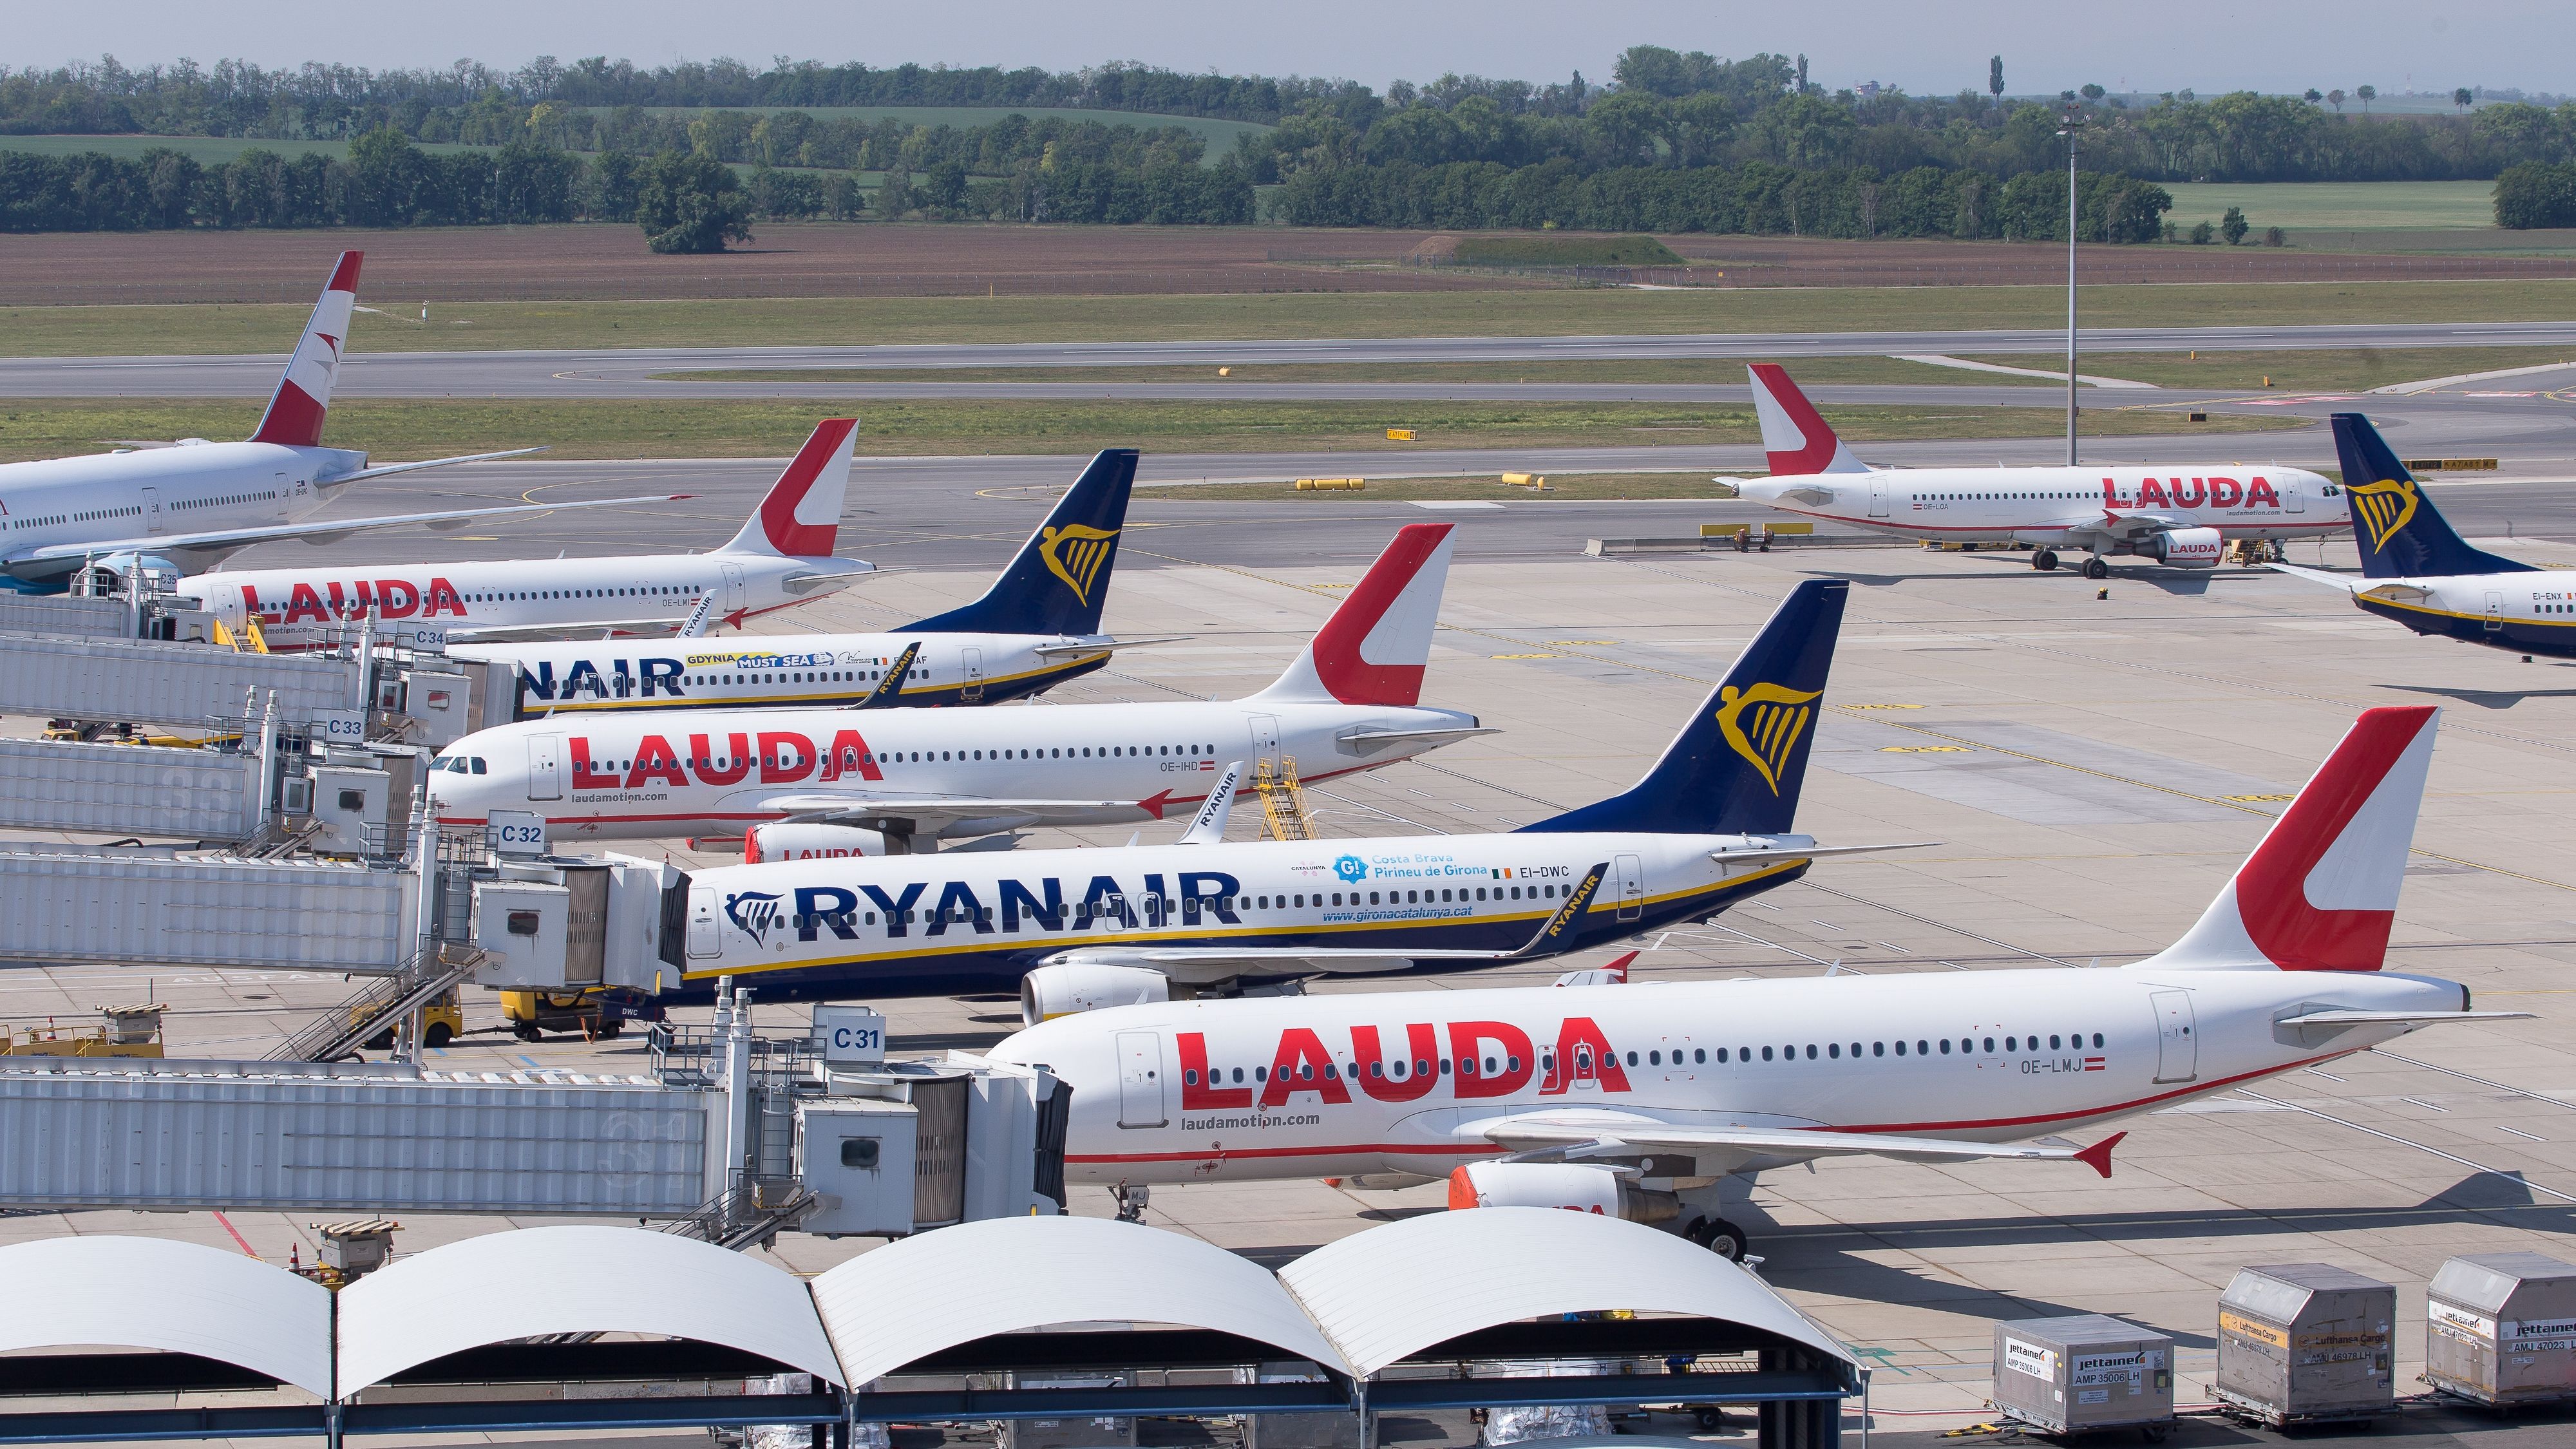 Many Ryanair and Lauda aircraft parked at airport gates.